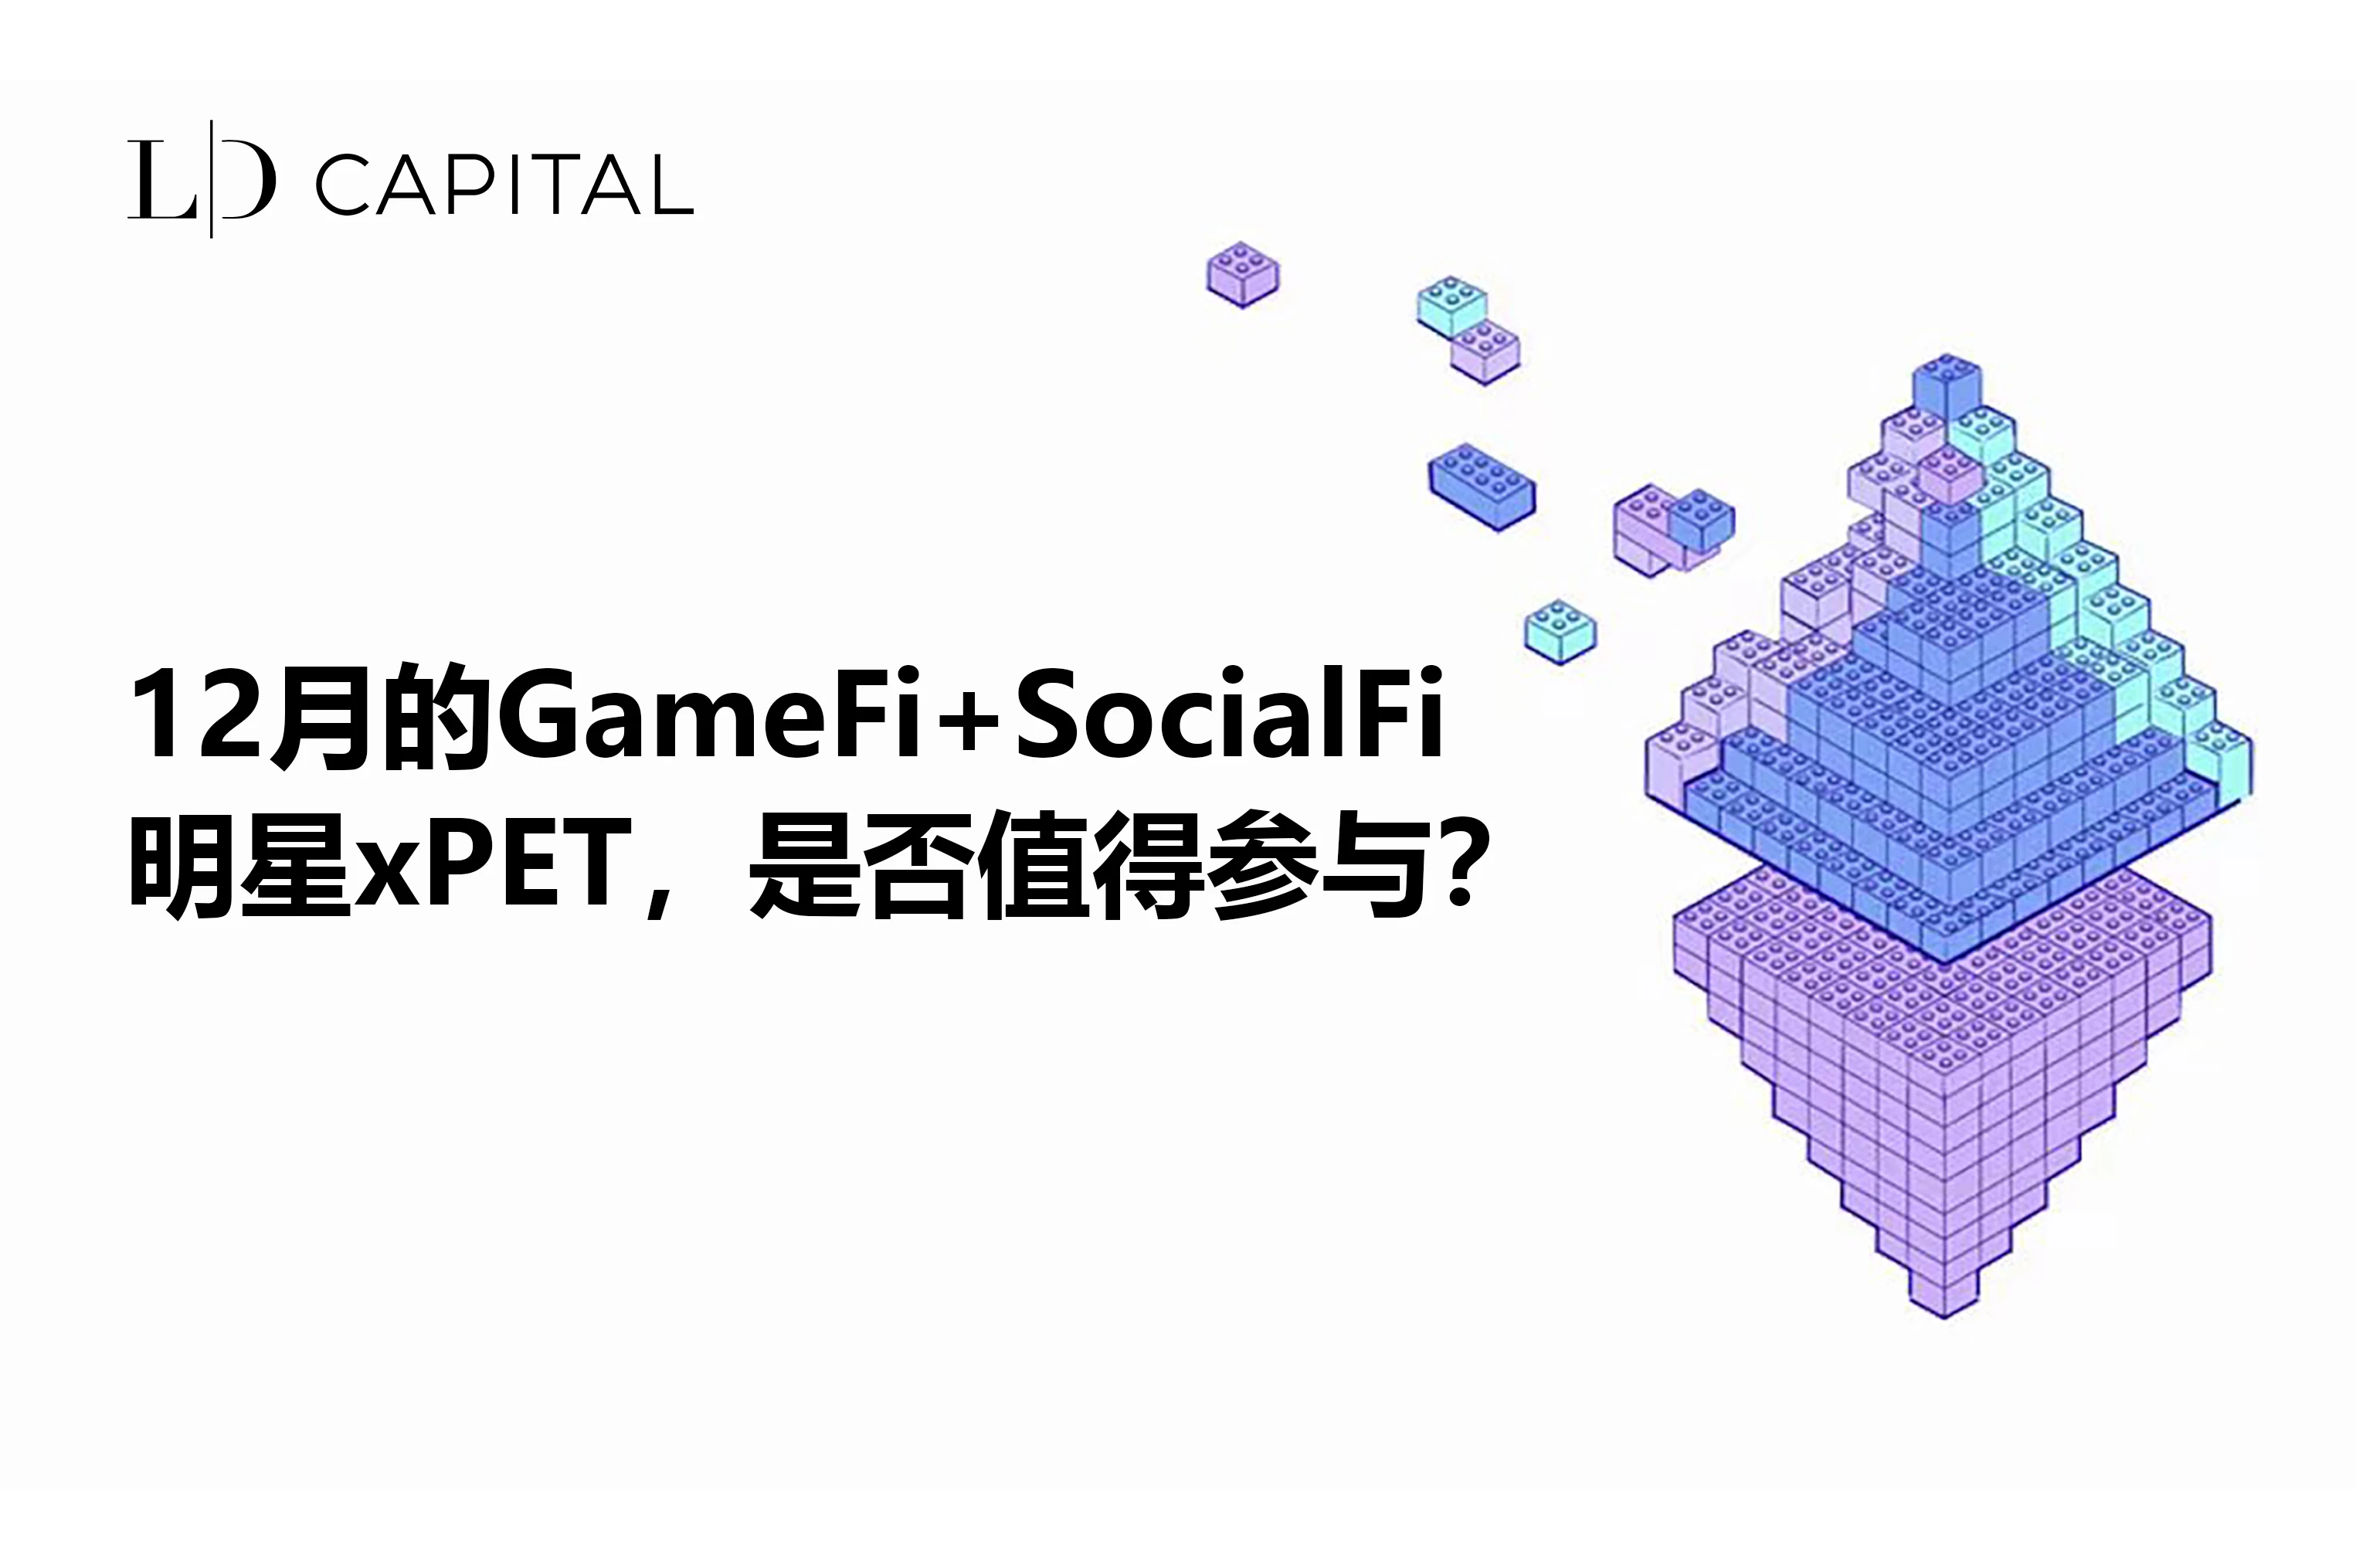 LD Capital：GameFi+SocialFi明星xPET，是否值得参与？